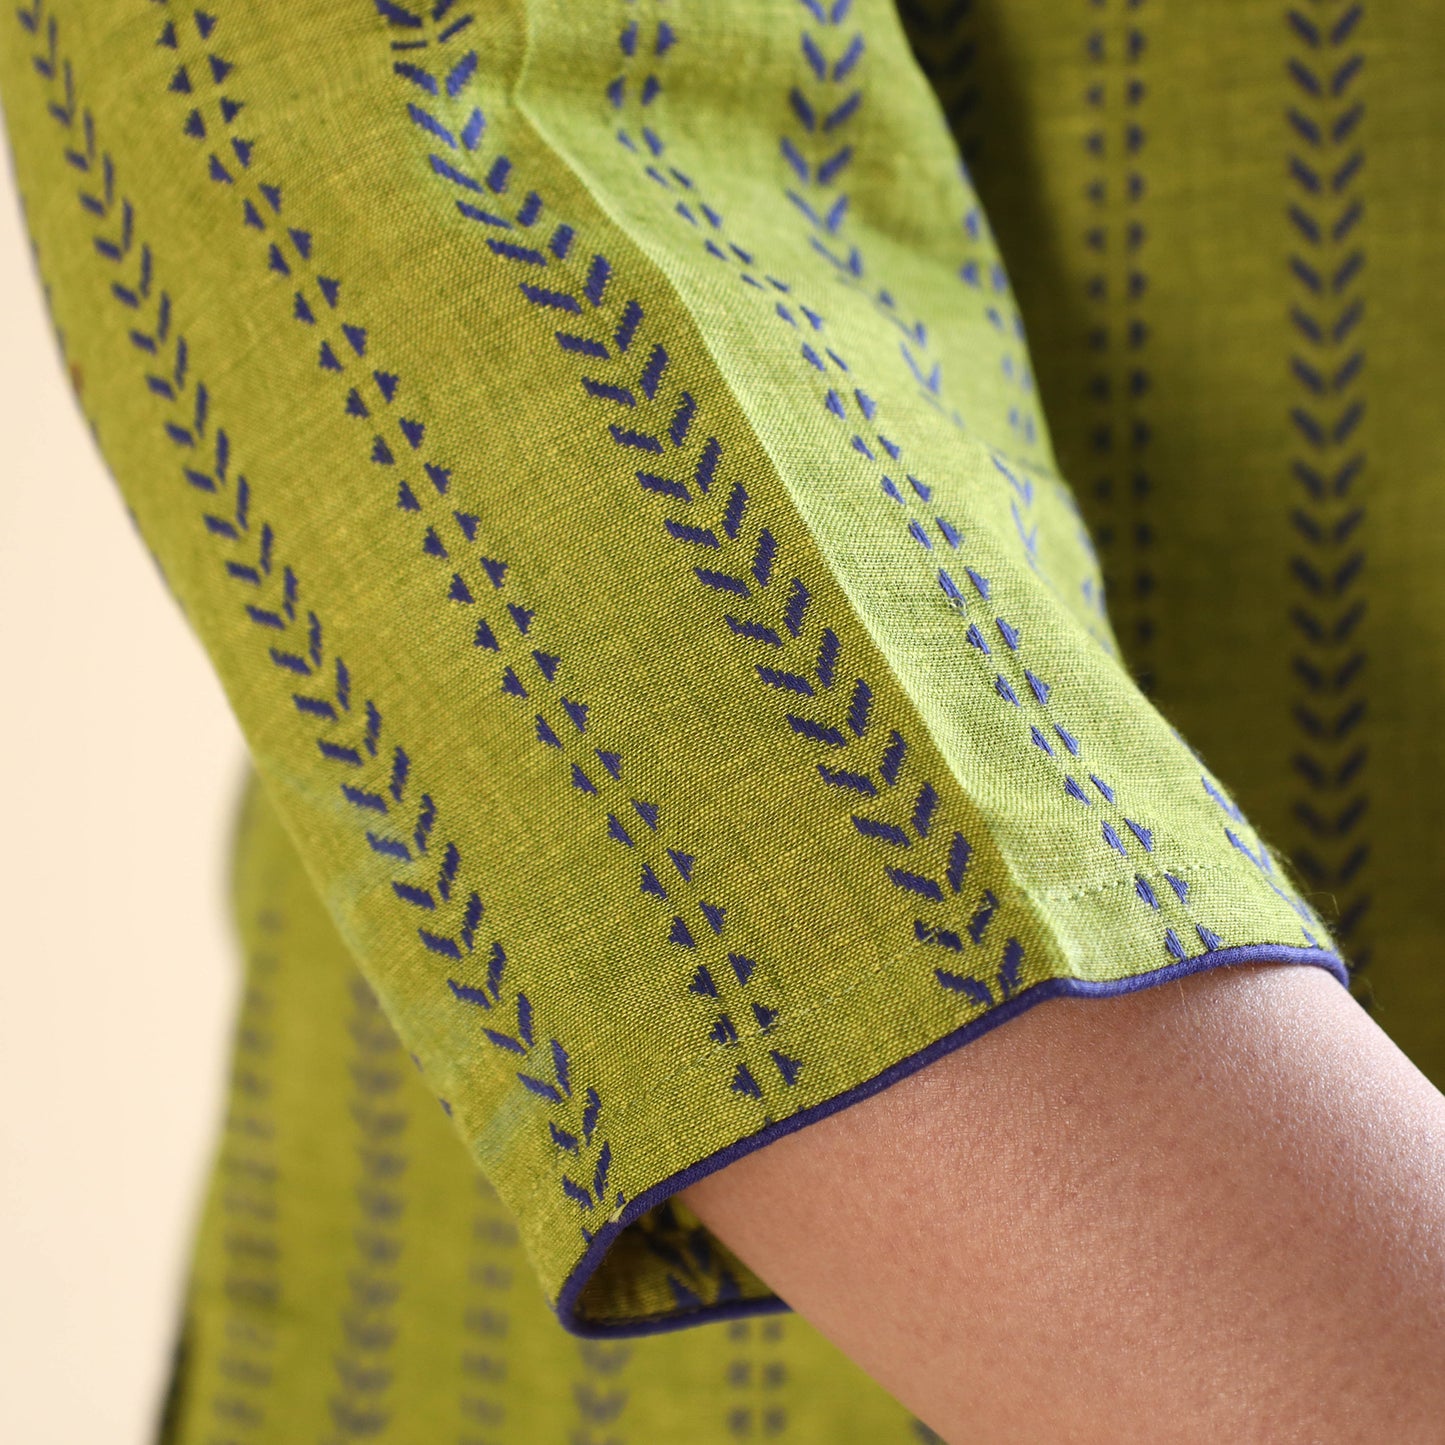 Yellow Green Jacquard Cotton Top & Pyjama Night Suit Set